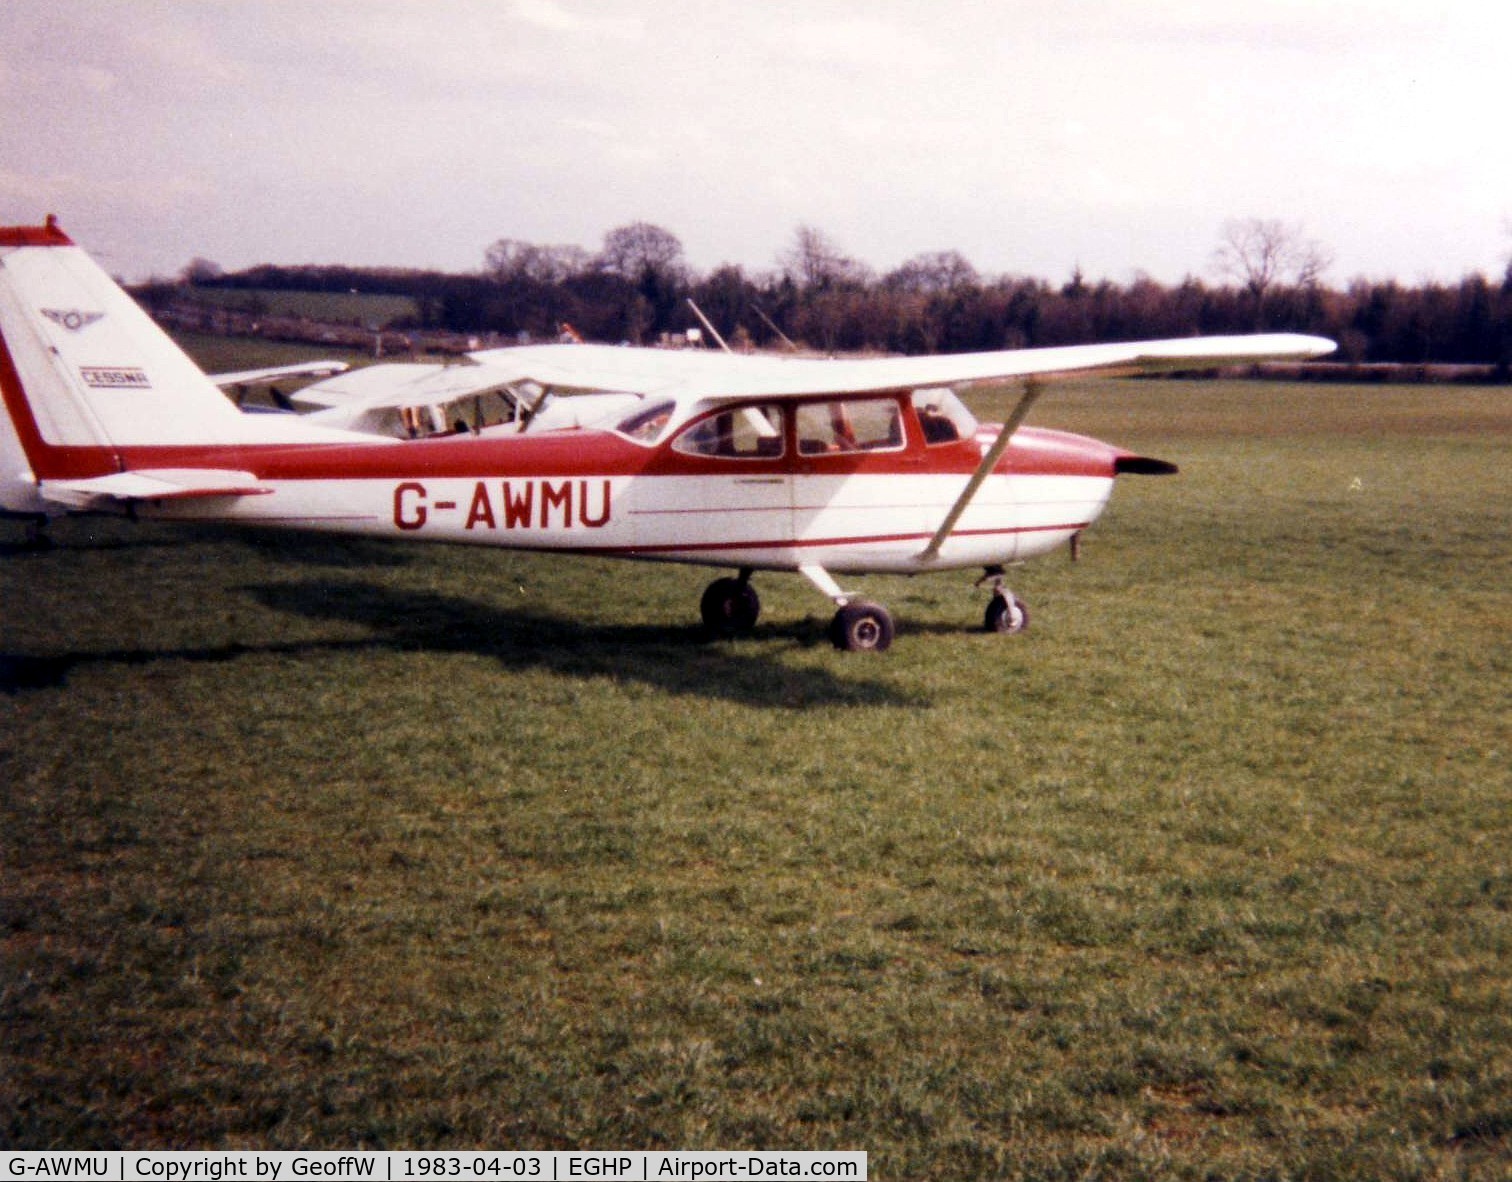 G-AWMU, 1968 Reims F172H Skyhawk C/N 0487, Cessna F172H G-AWMU attending the 1983 Jodel fly-in at Popham